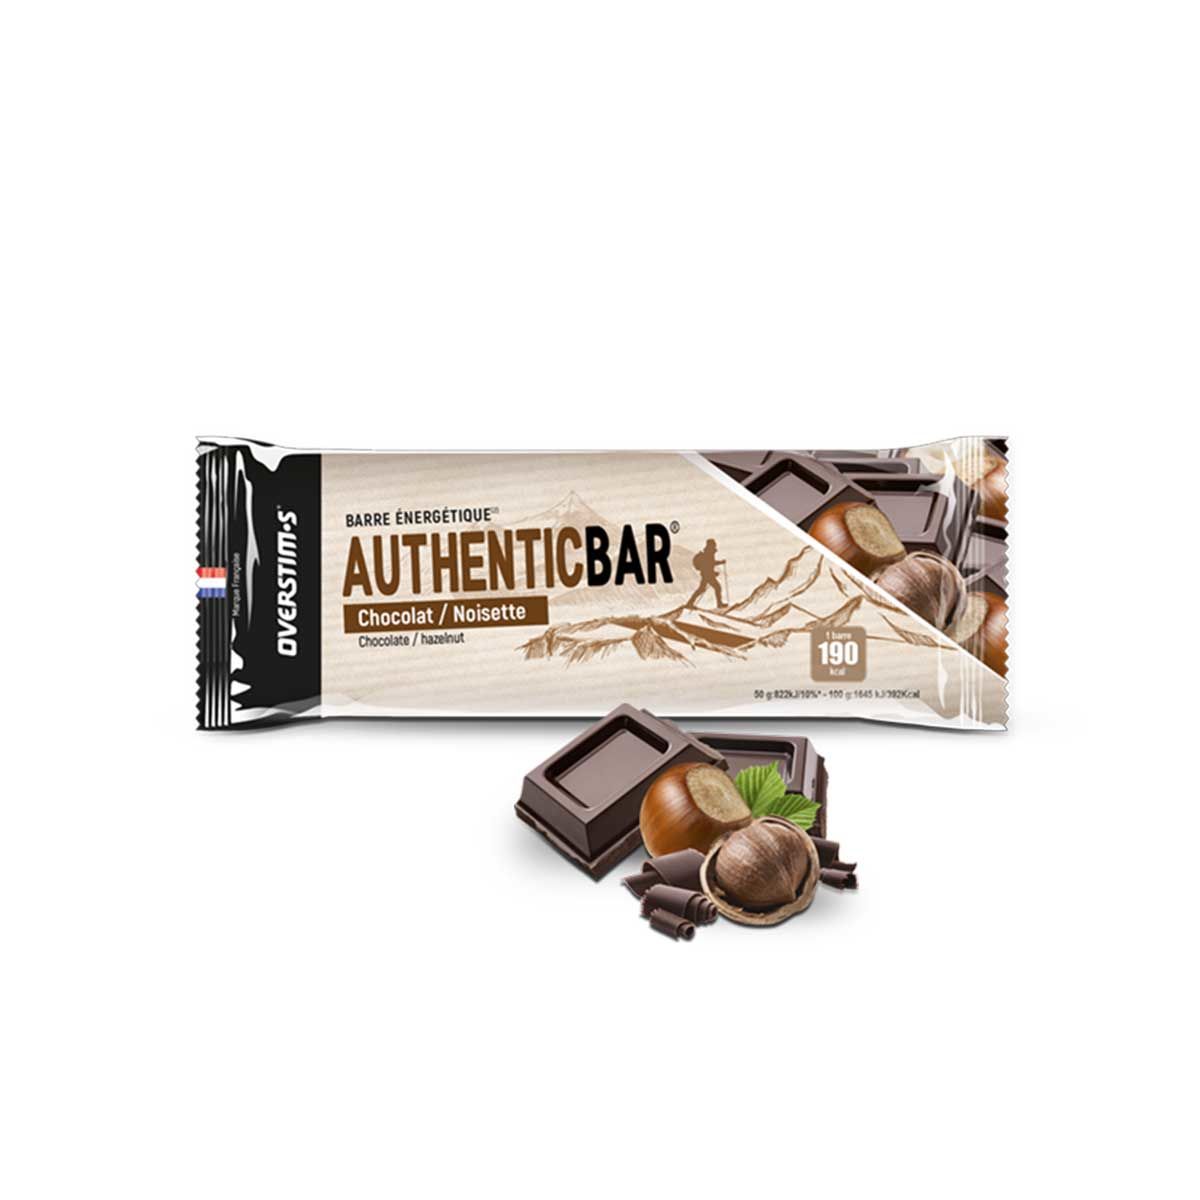 Authentic bar Overstim.s - Chocolate, avellanas